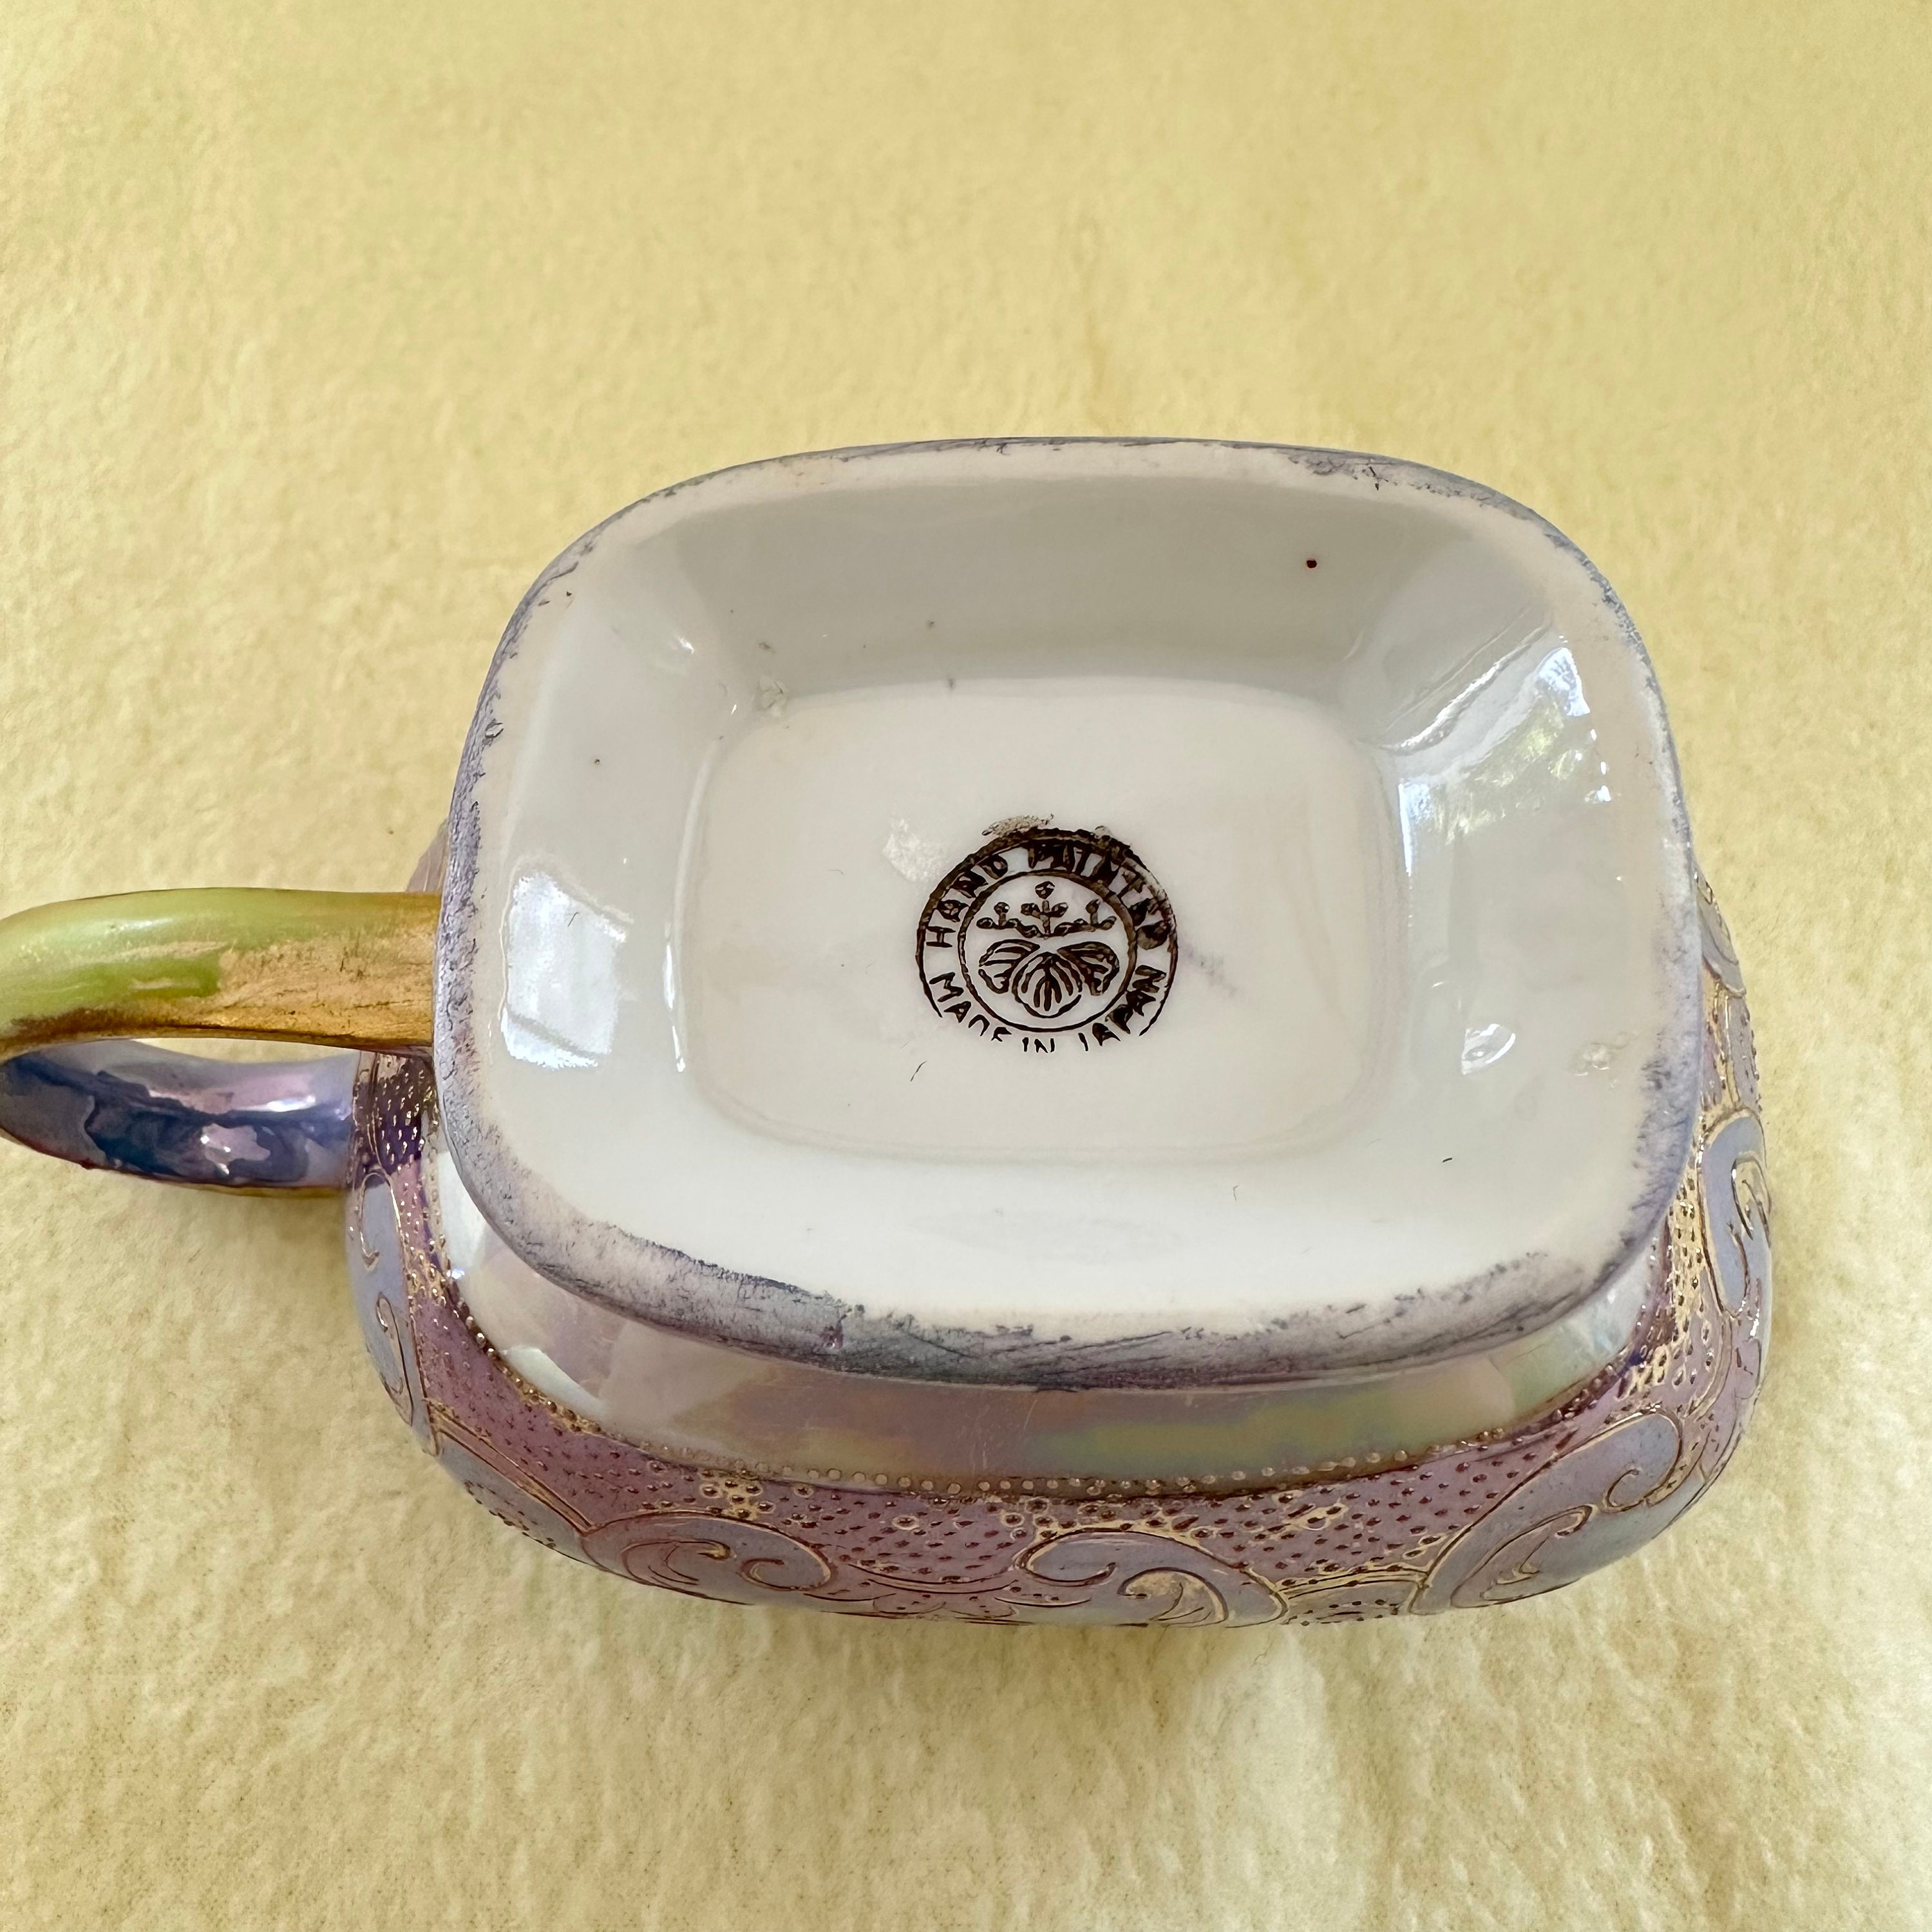 Japanese Ceramic Garlic Grater in Cream – GOLDEN RULE GALLERY